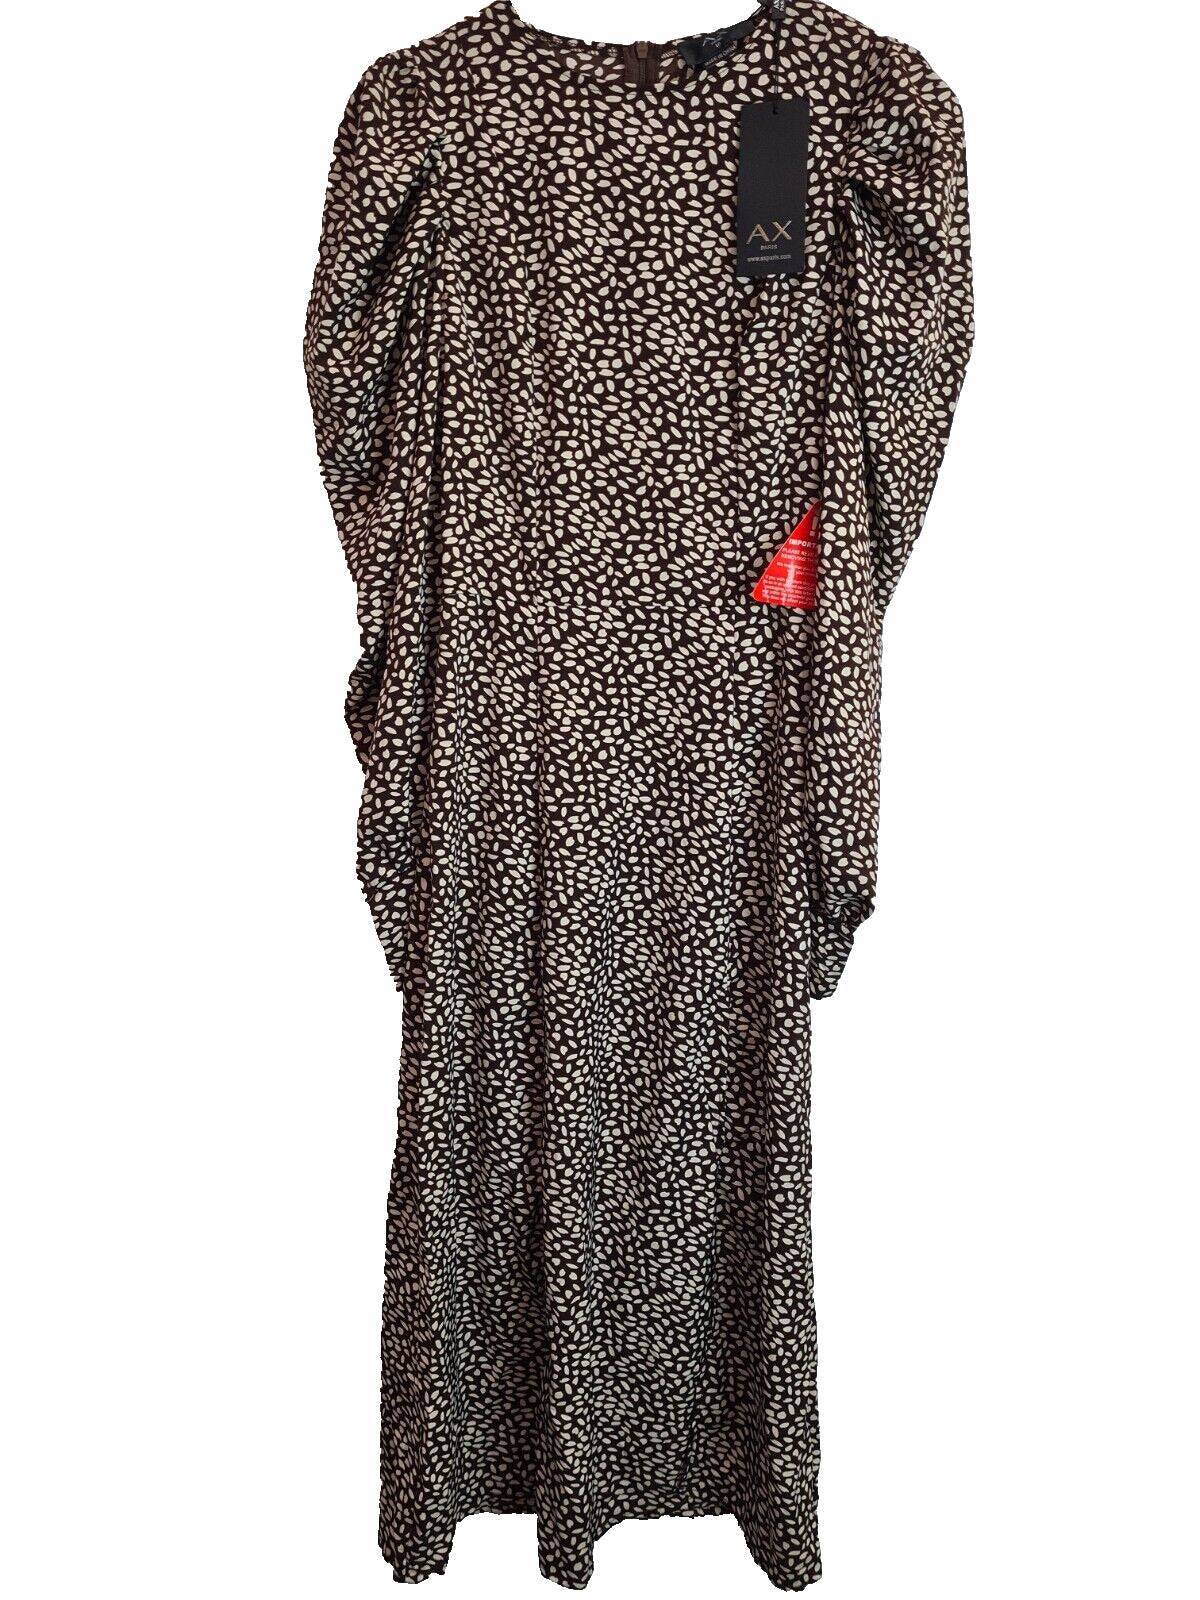 AX Paris Brown Printed Long Sleeve Split Leg Midi Dress Size UK 16